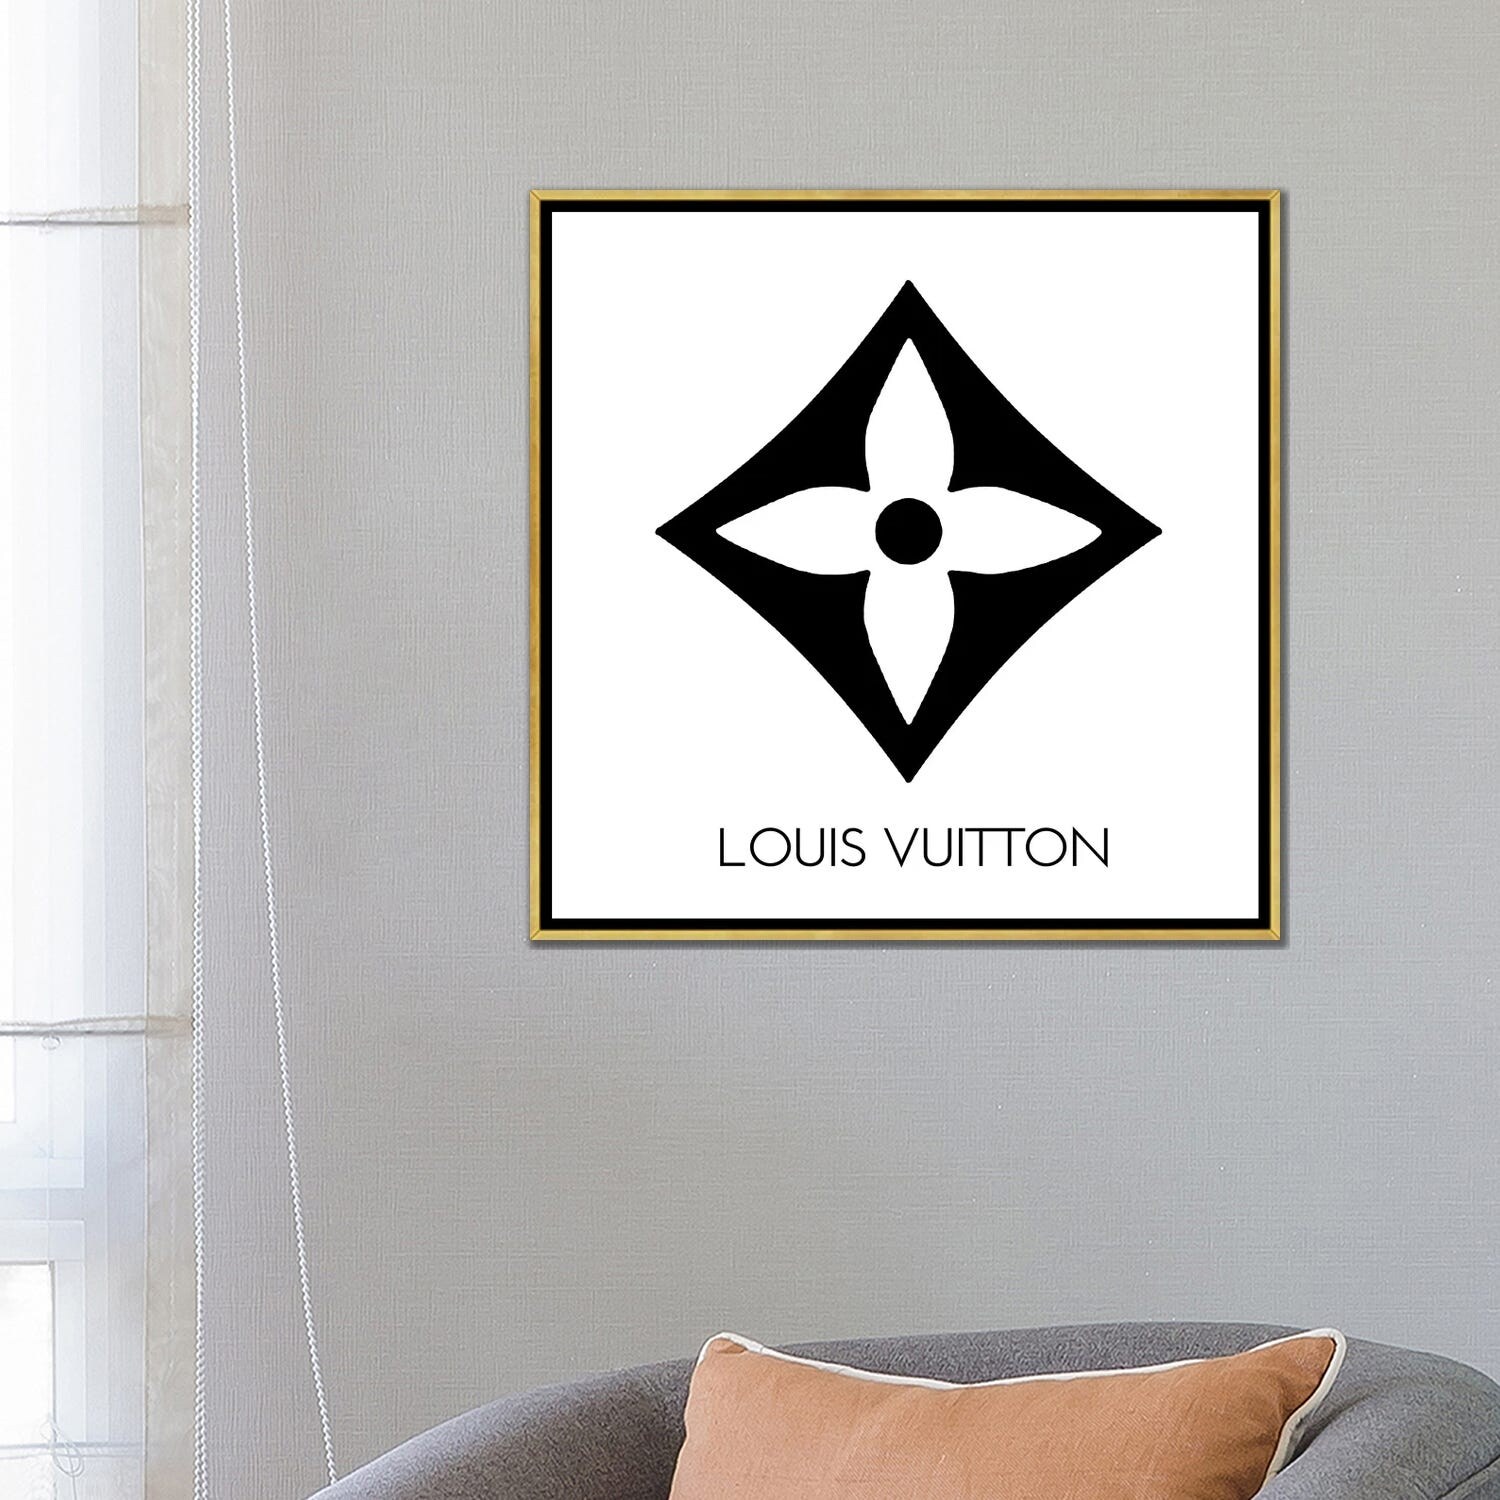 Framed Canvas Art (White Floating Frame) - Louis Vuitton Symbol Light White by Art Mirano ( Fashion > Fashion Brands > Louis Vuitton art) - 26x26 in